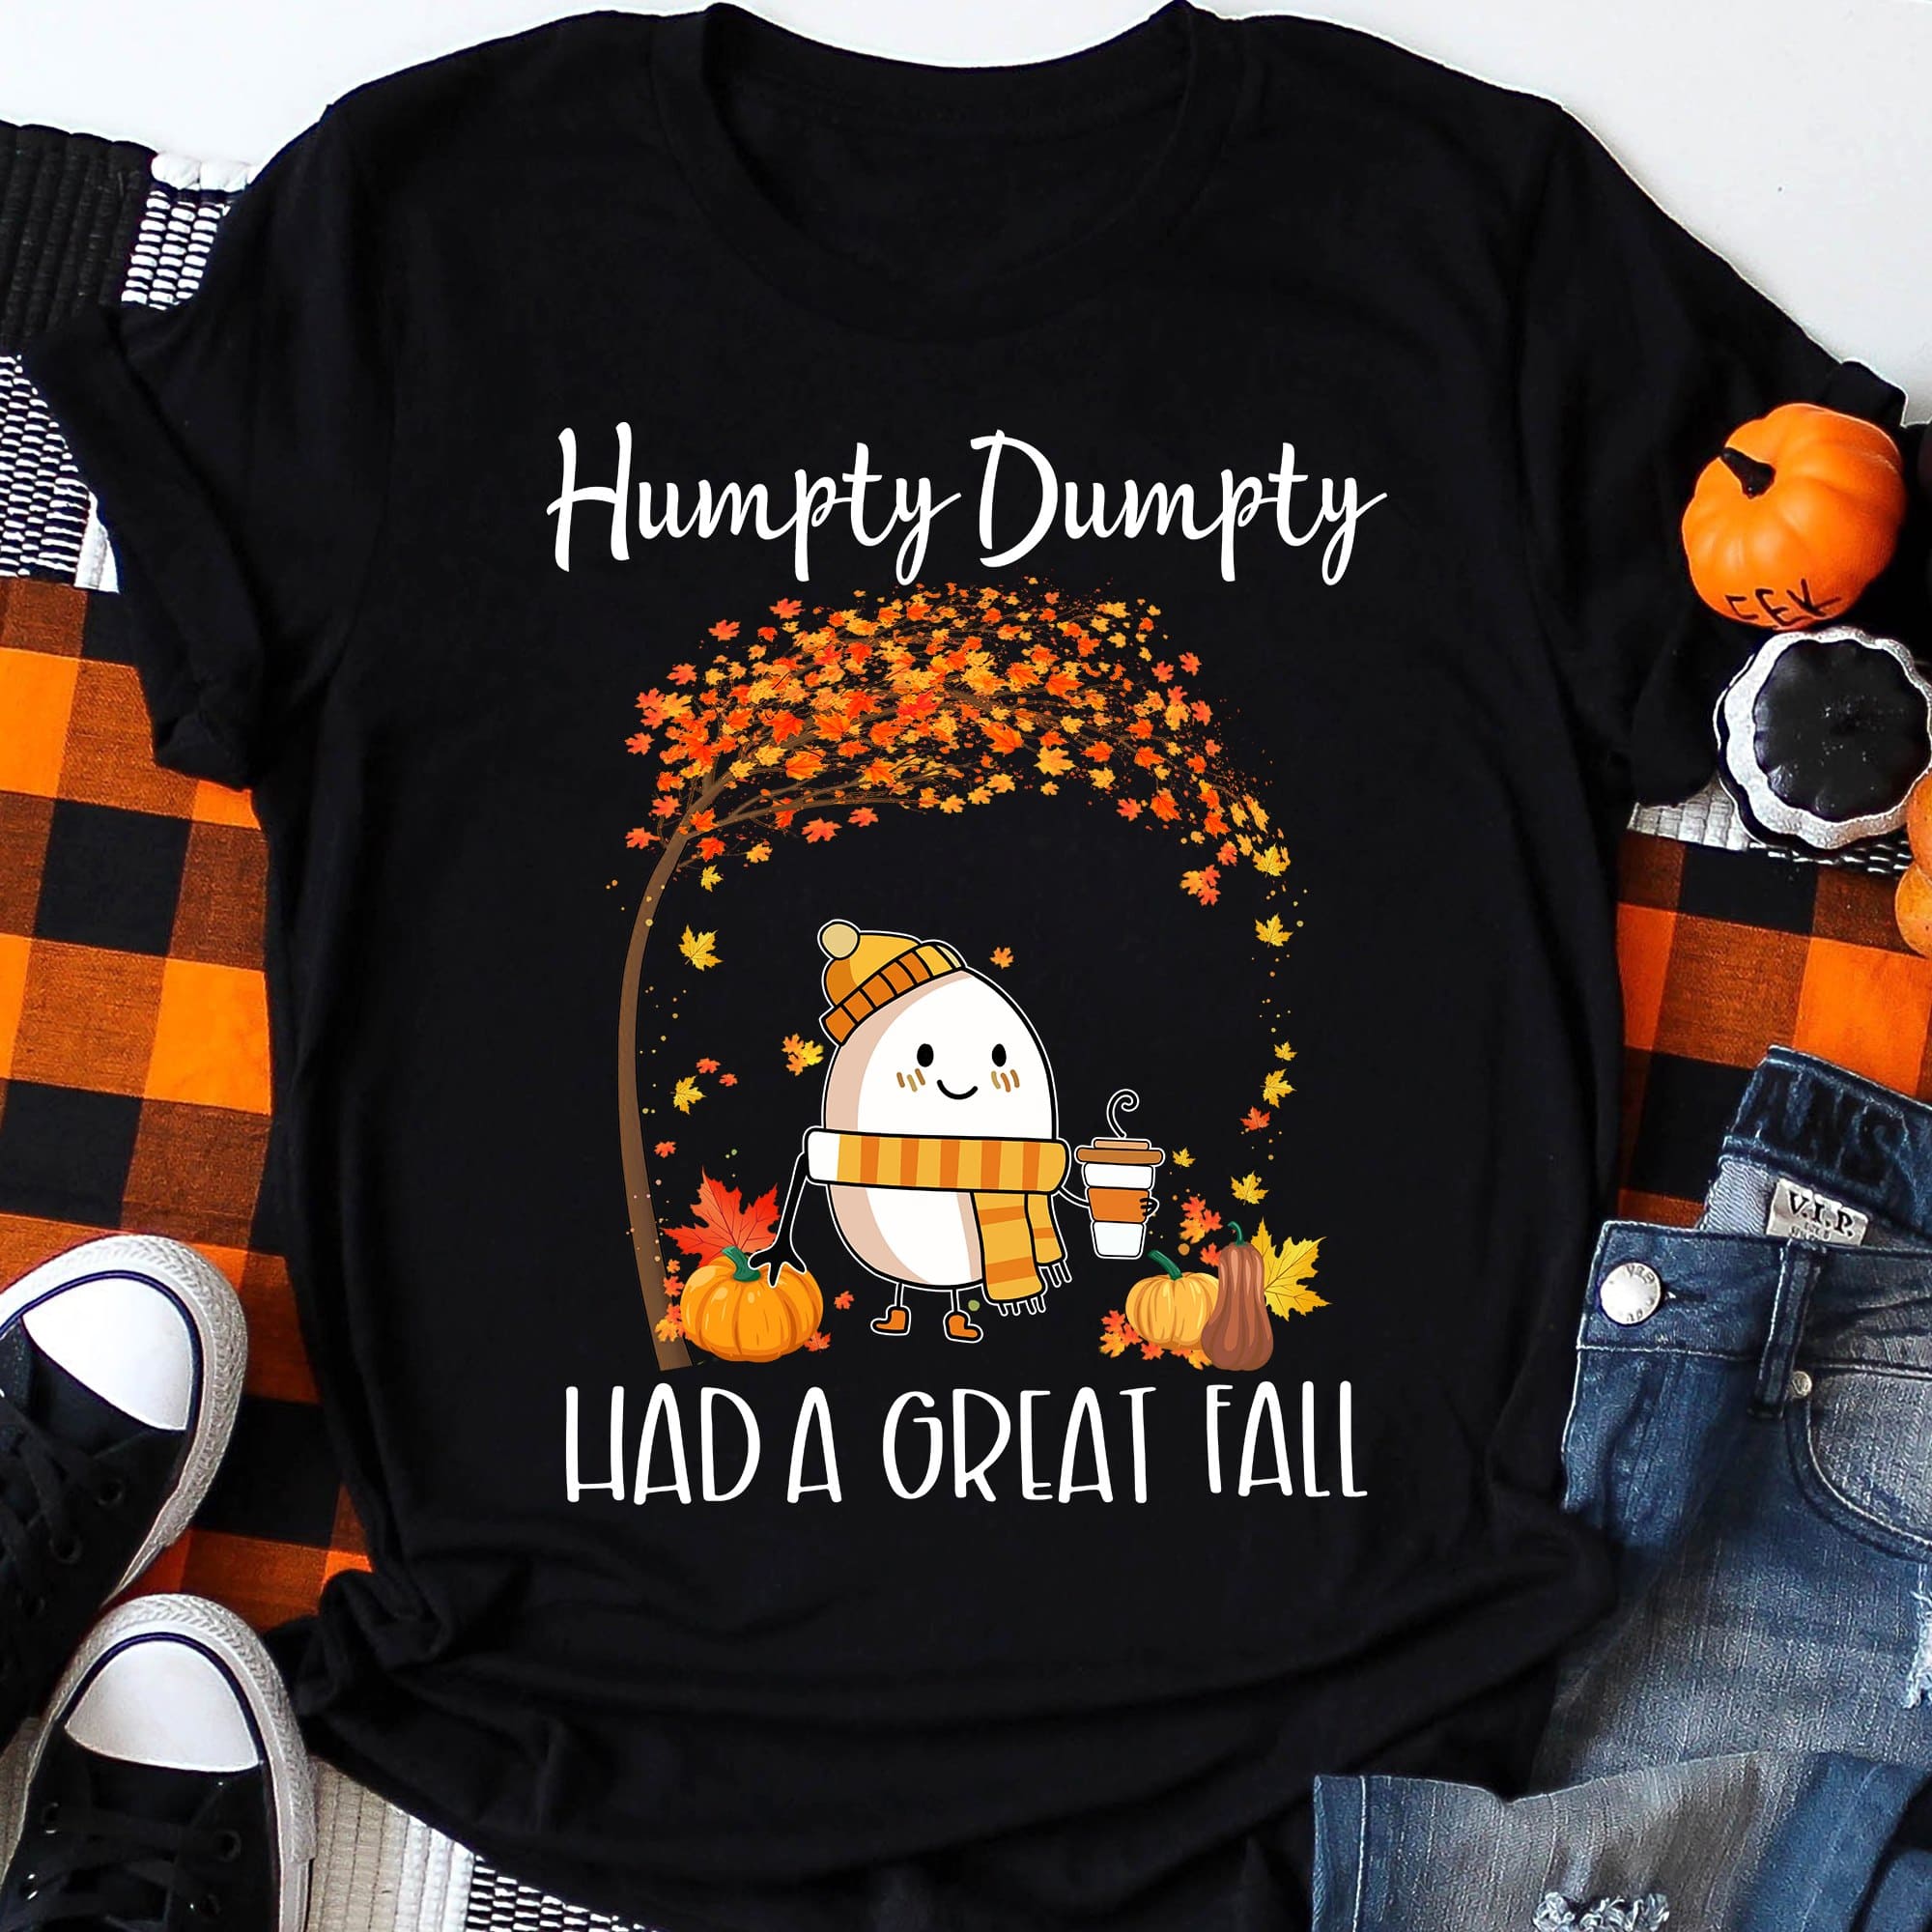 Humpty Dumpty - Had a great fall, Fall the wonderful season